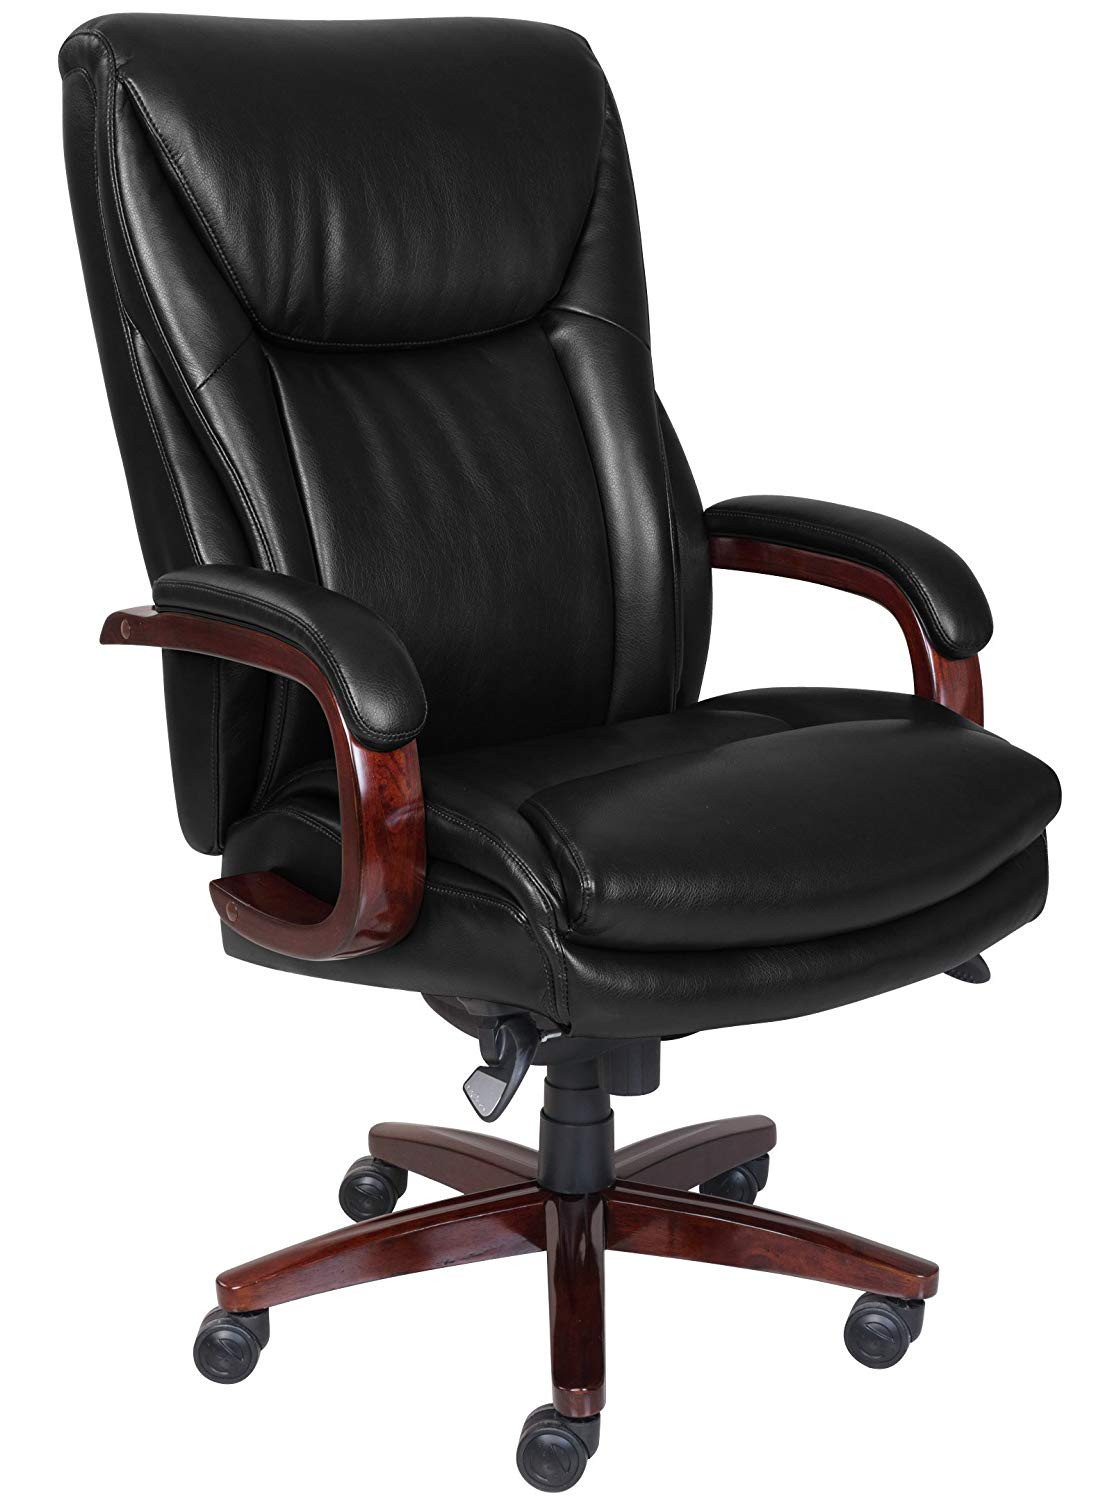 Best ideas about La-Z-Boy Office Chair
. Save or Pin La Z Boy Edmonton Bonded Leather fice Chair Coffee Now.